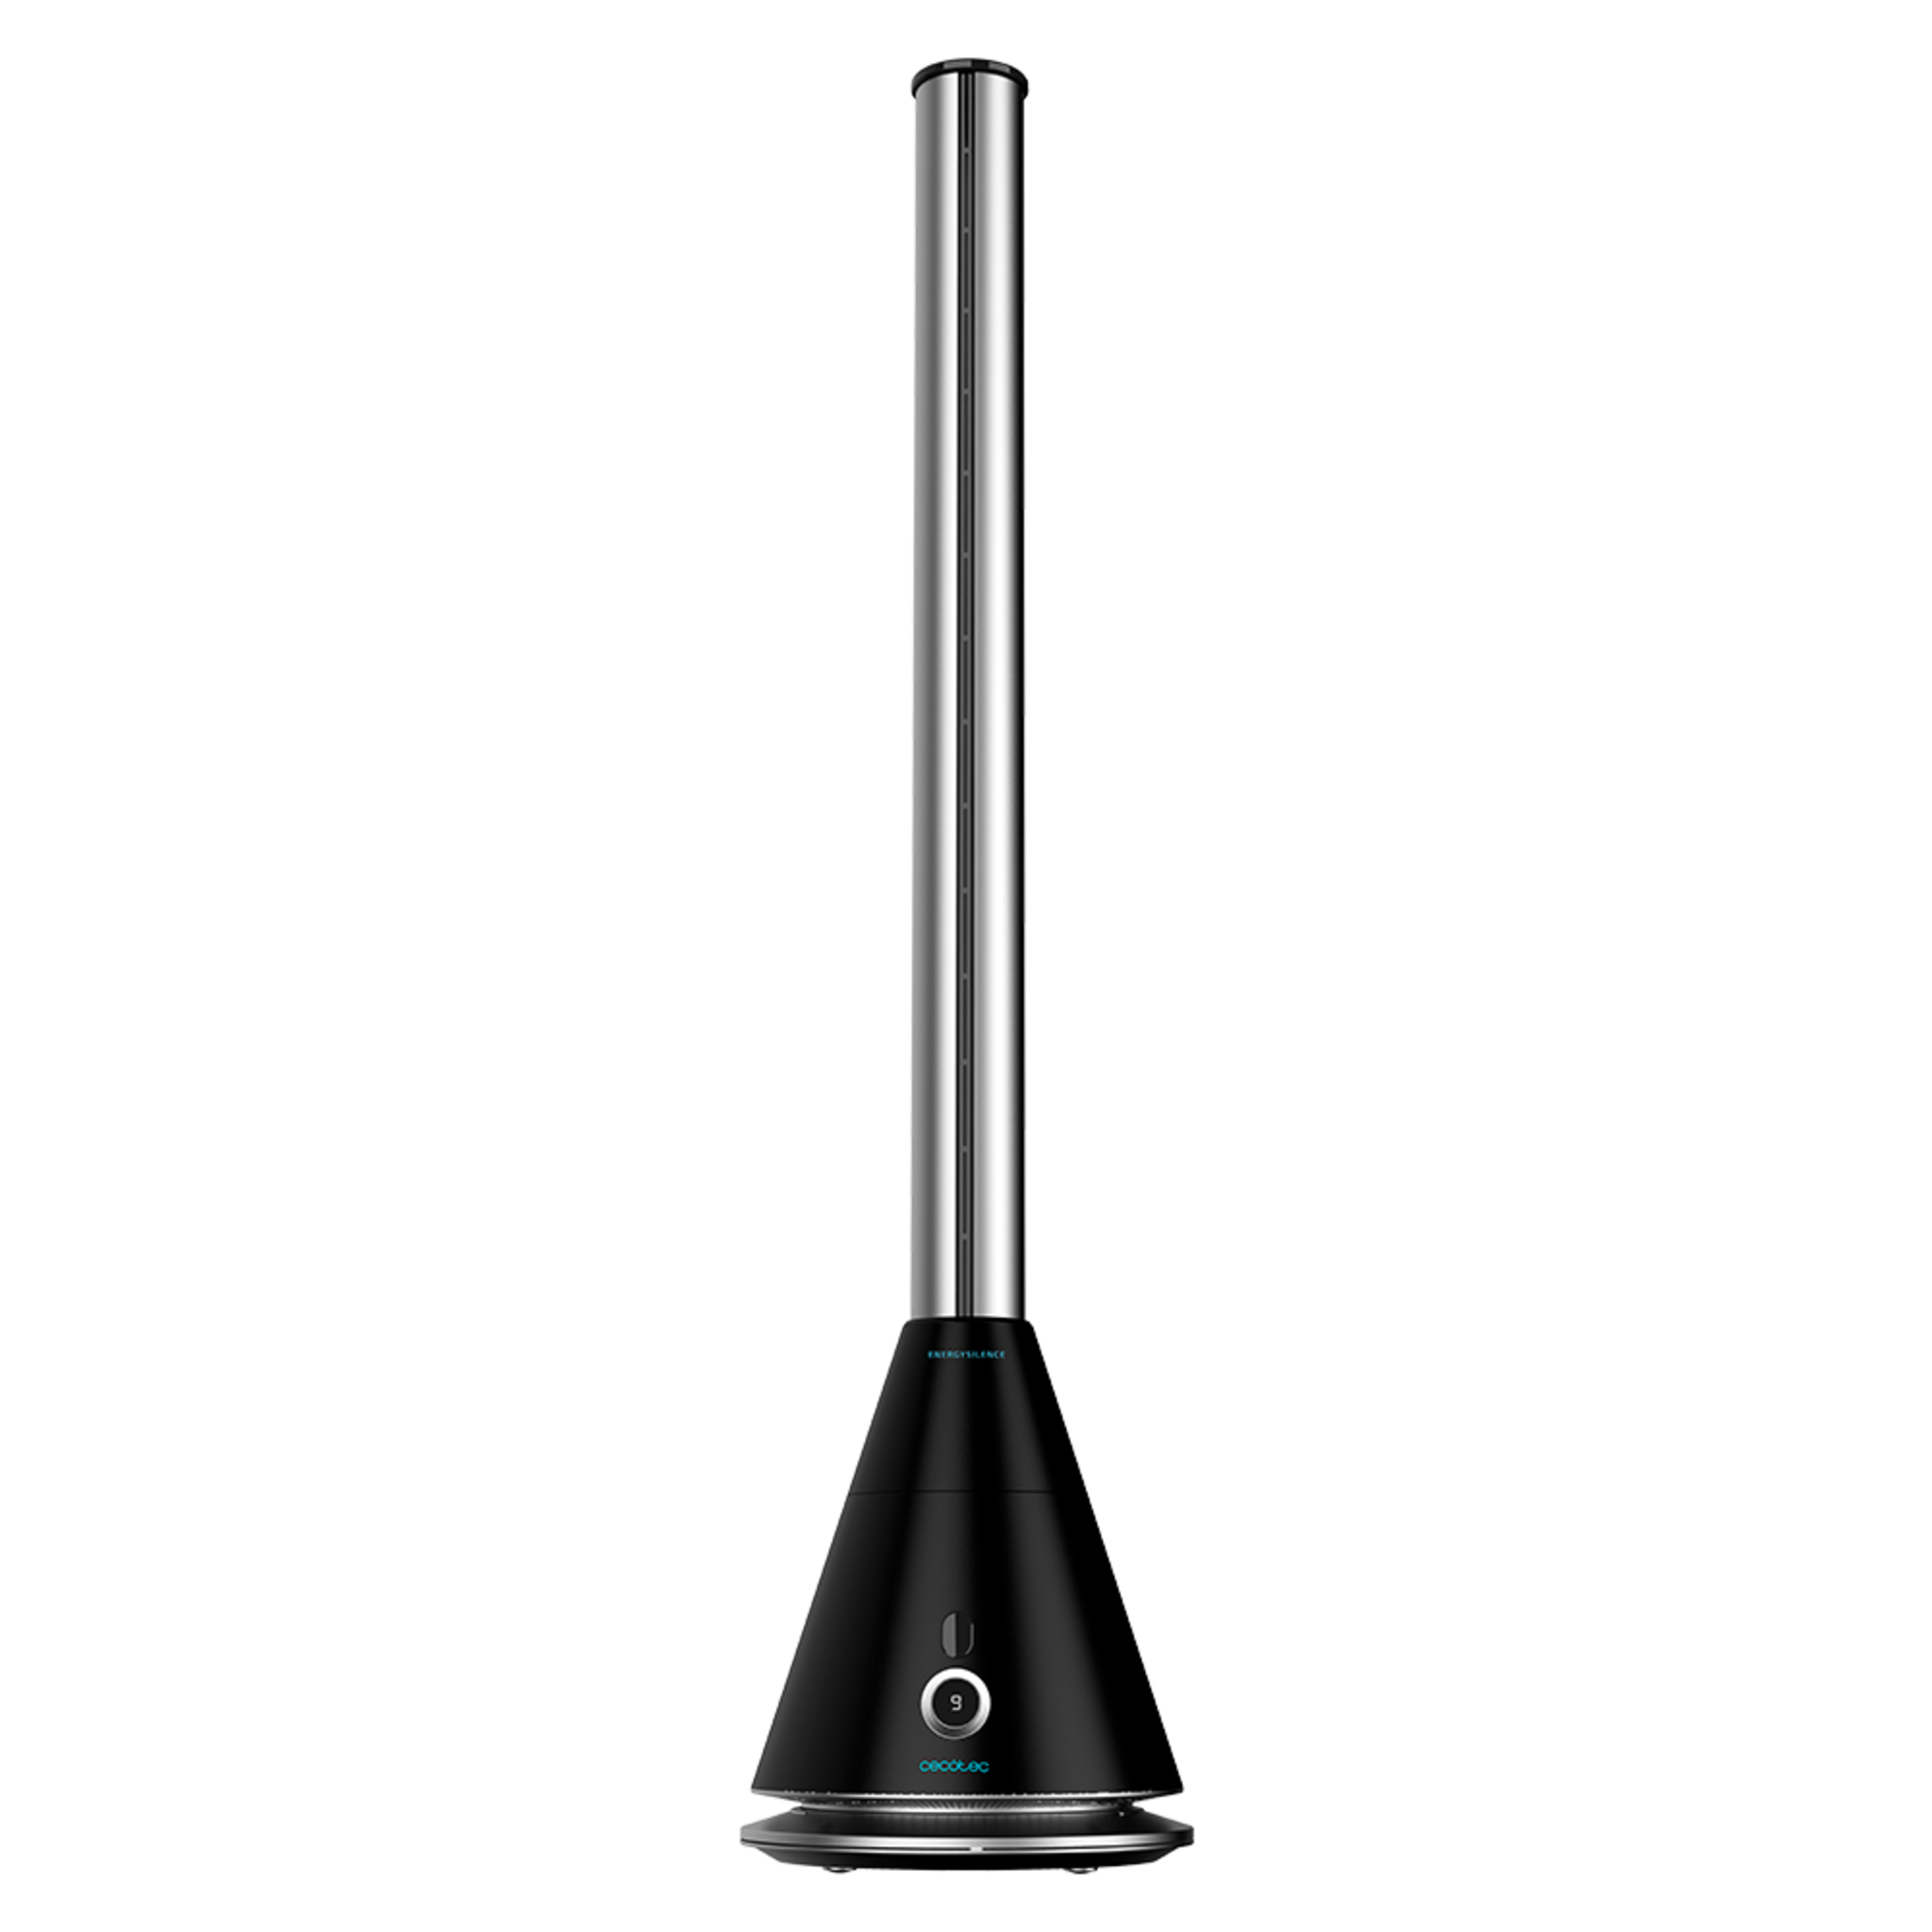 Ventilador de Torre sin Aspas con Mando a Distancia y Temporizador EnergySilence 9900 Skyline Bladeless Black. 26 W, 38" (96 cm) de Altura, Motor de Cobre, 9 Velocidades, Negro